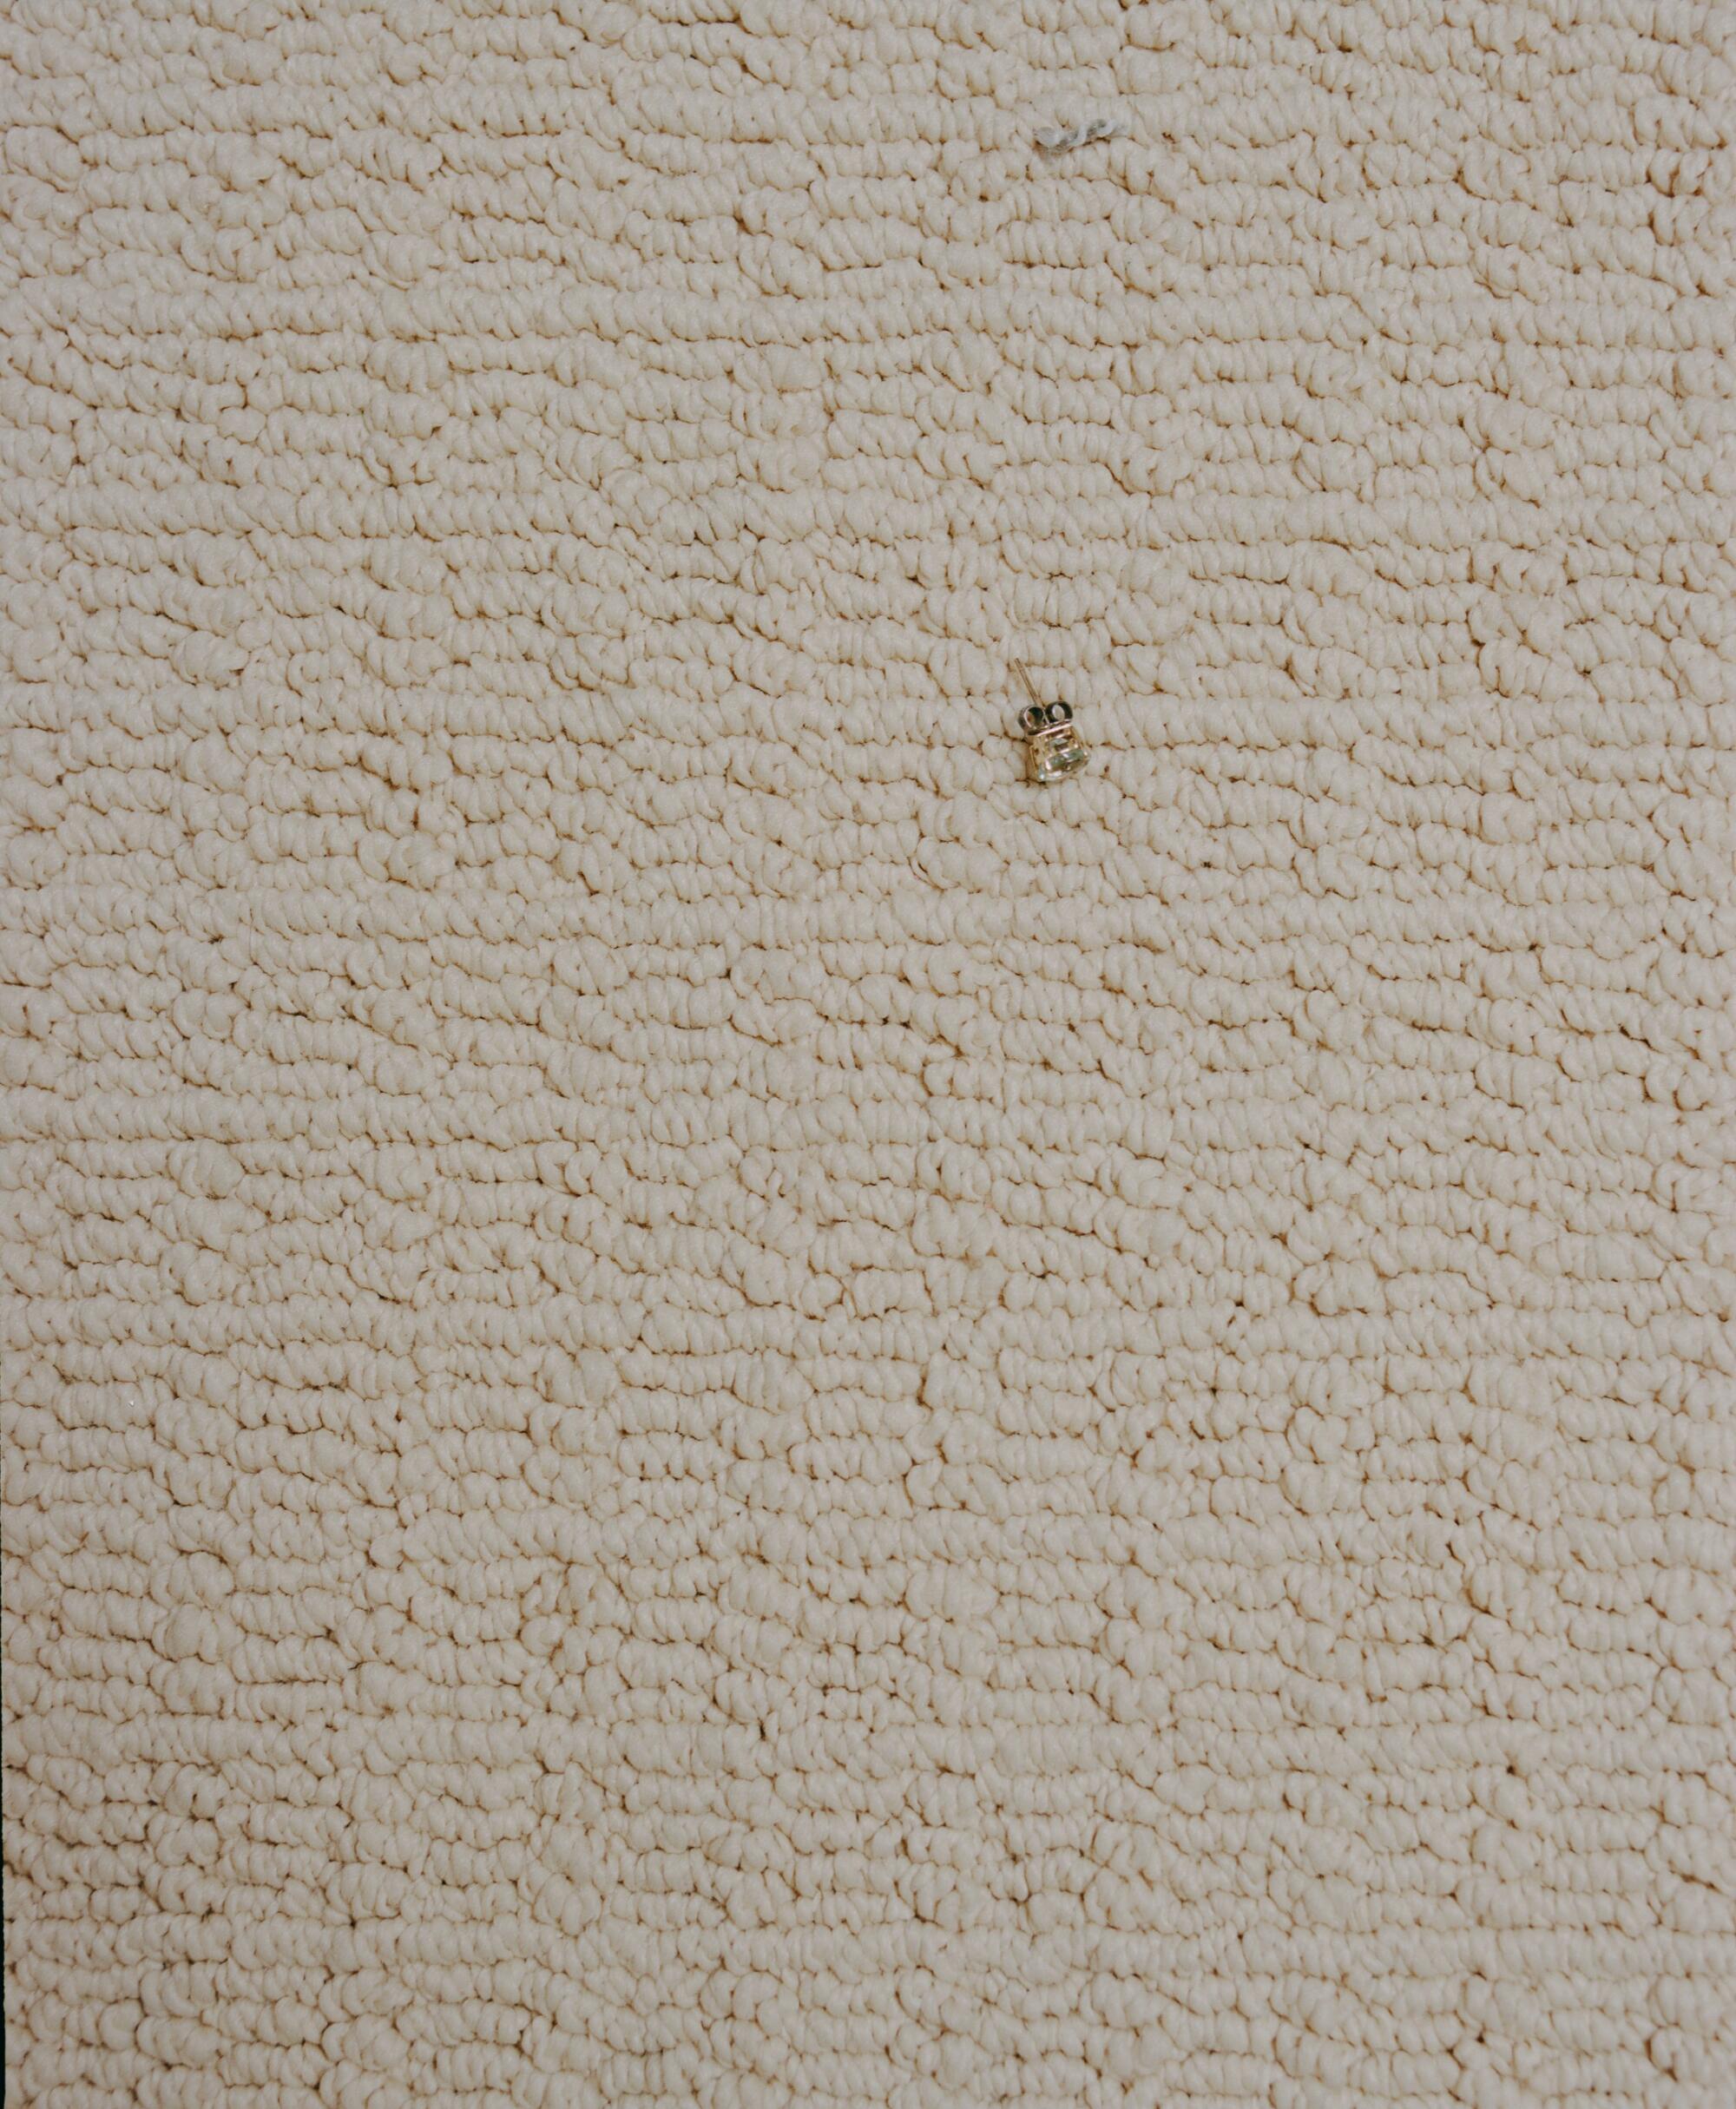 Photo essay on carpets for Image magazine, issue 11 - Renovation